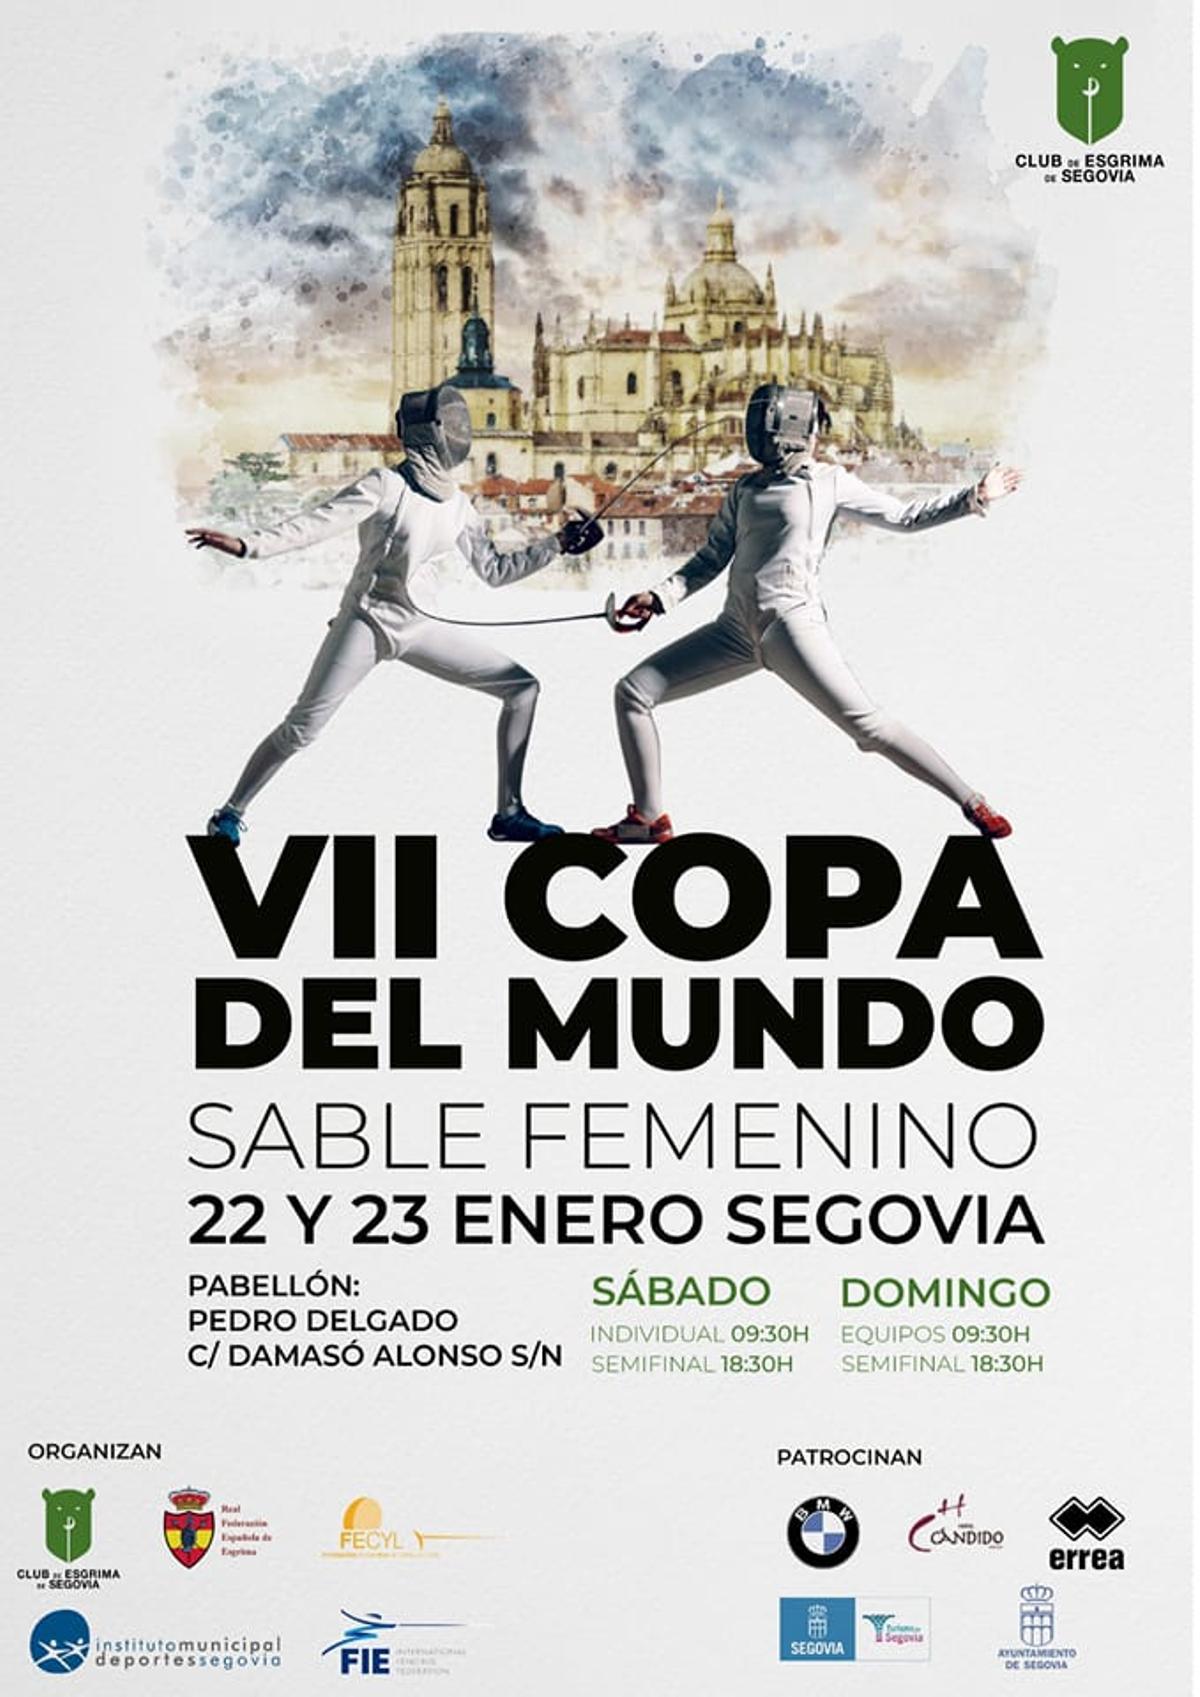 Cartel anunciador de la cita de Segovia.